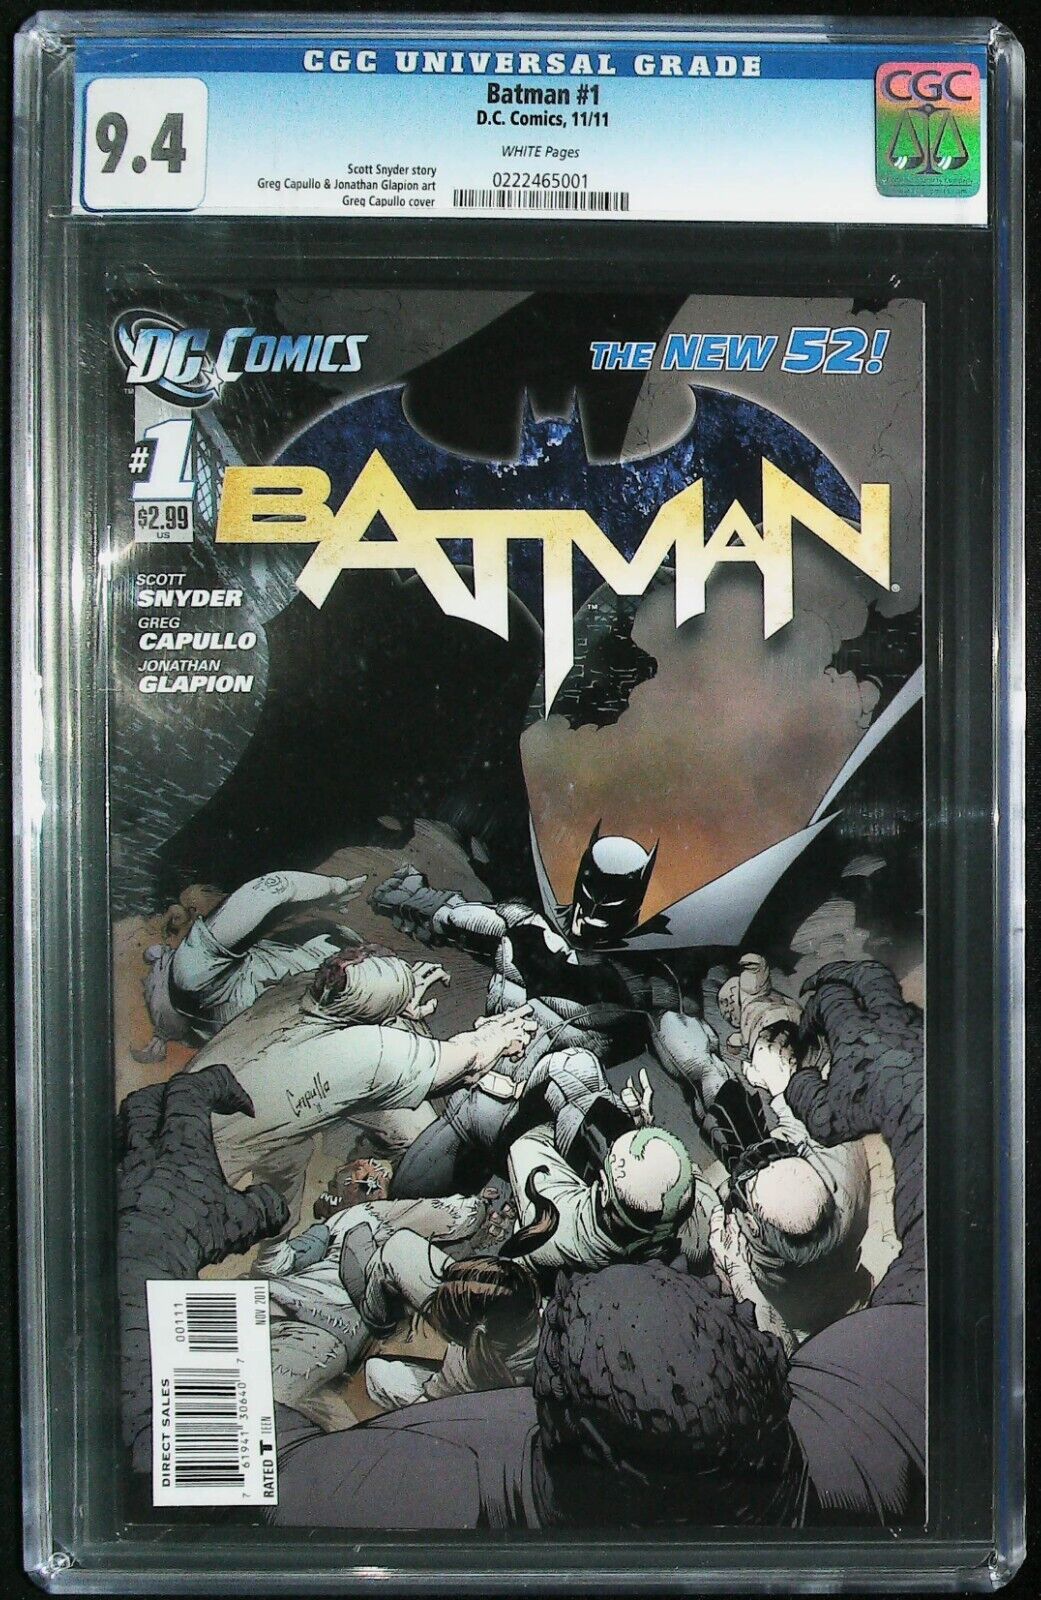 Batman #1 Vol 2 (2011) - KEY ISSUE- DC - The New 52 - CGC Grade 9.4